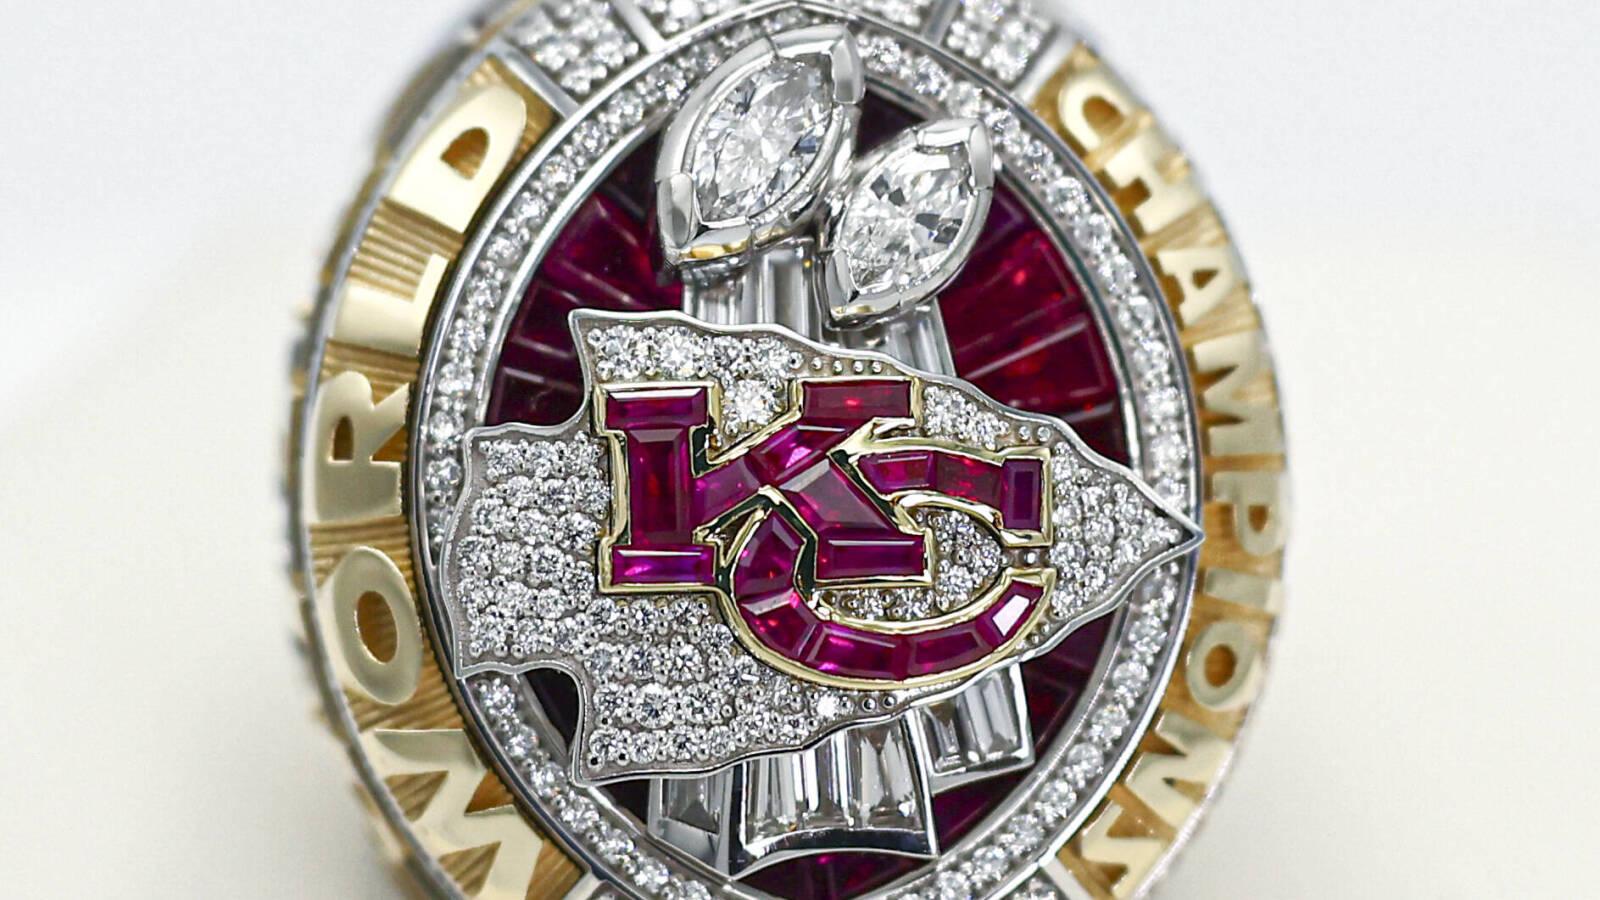 Super Bowl I-Super Bowl LV NFL Championship Ring Collector's